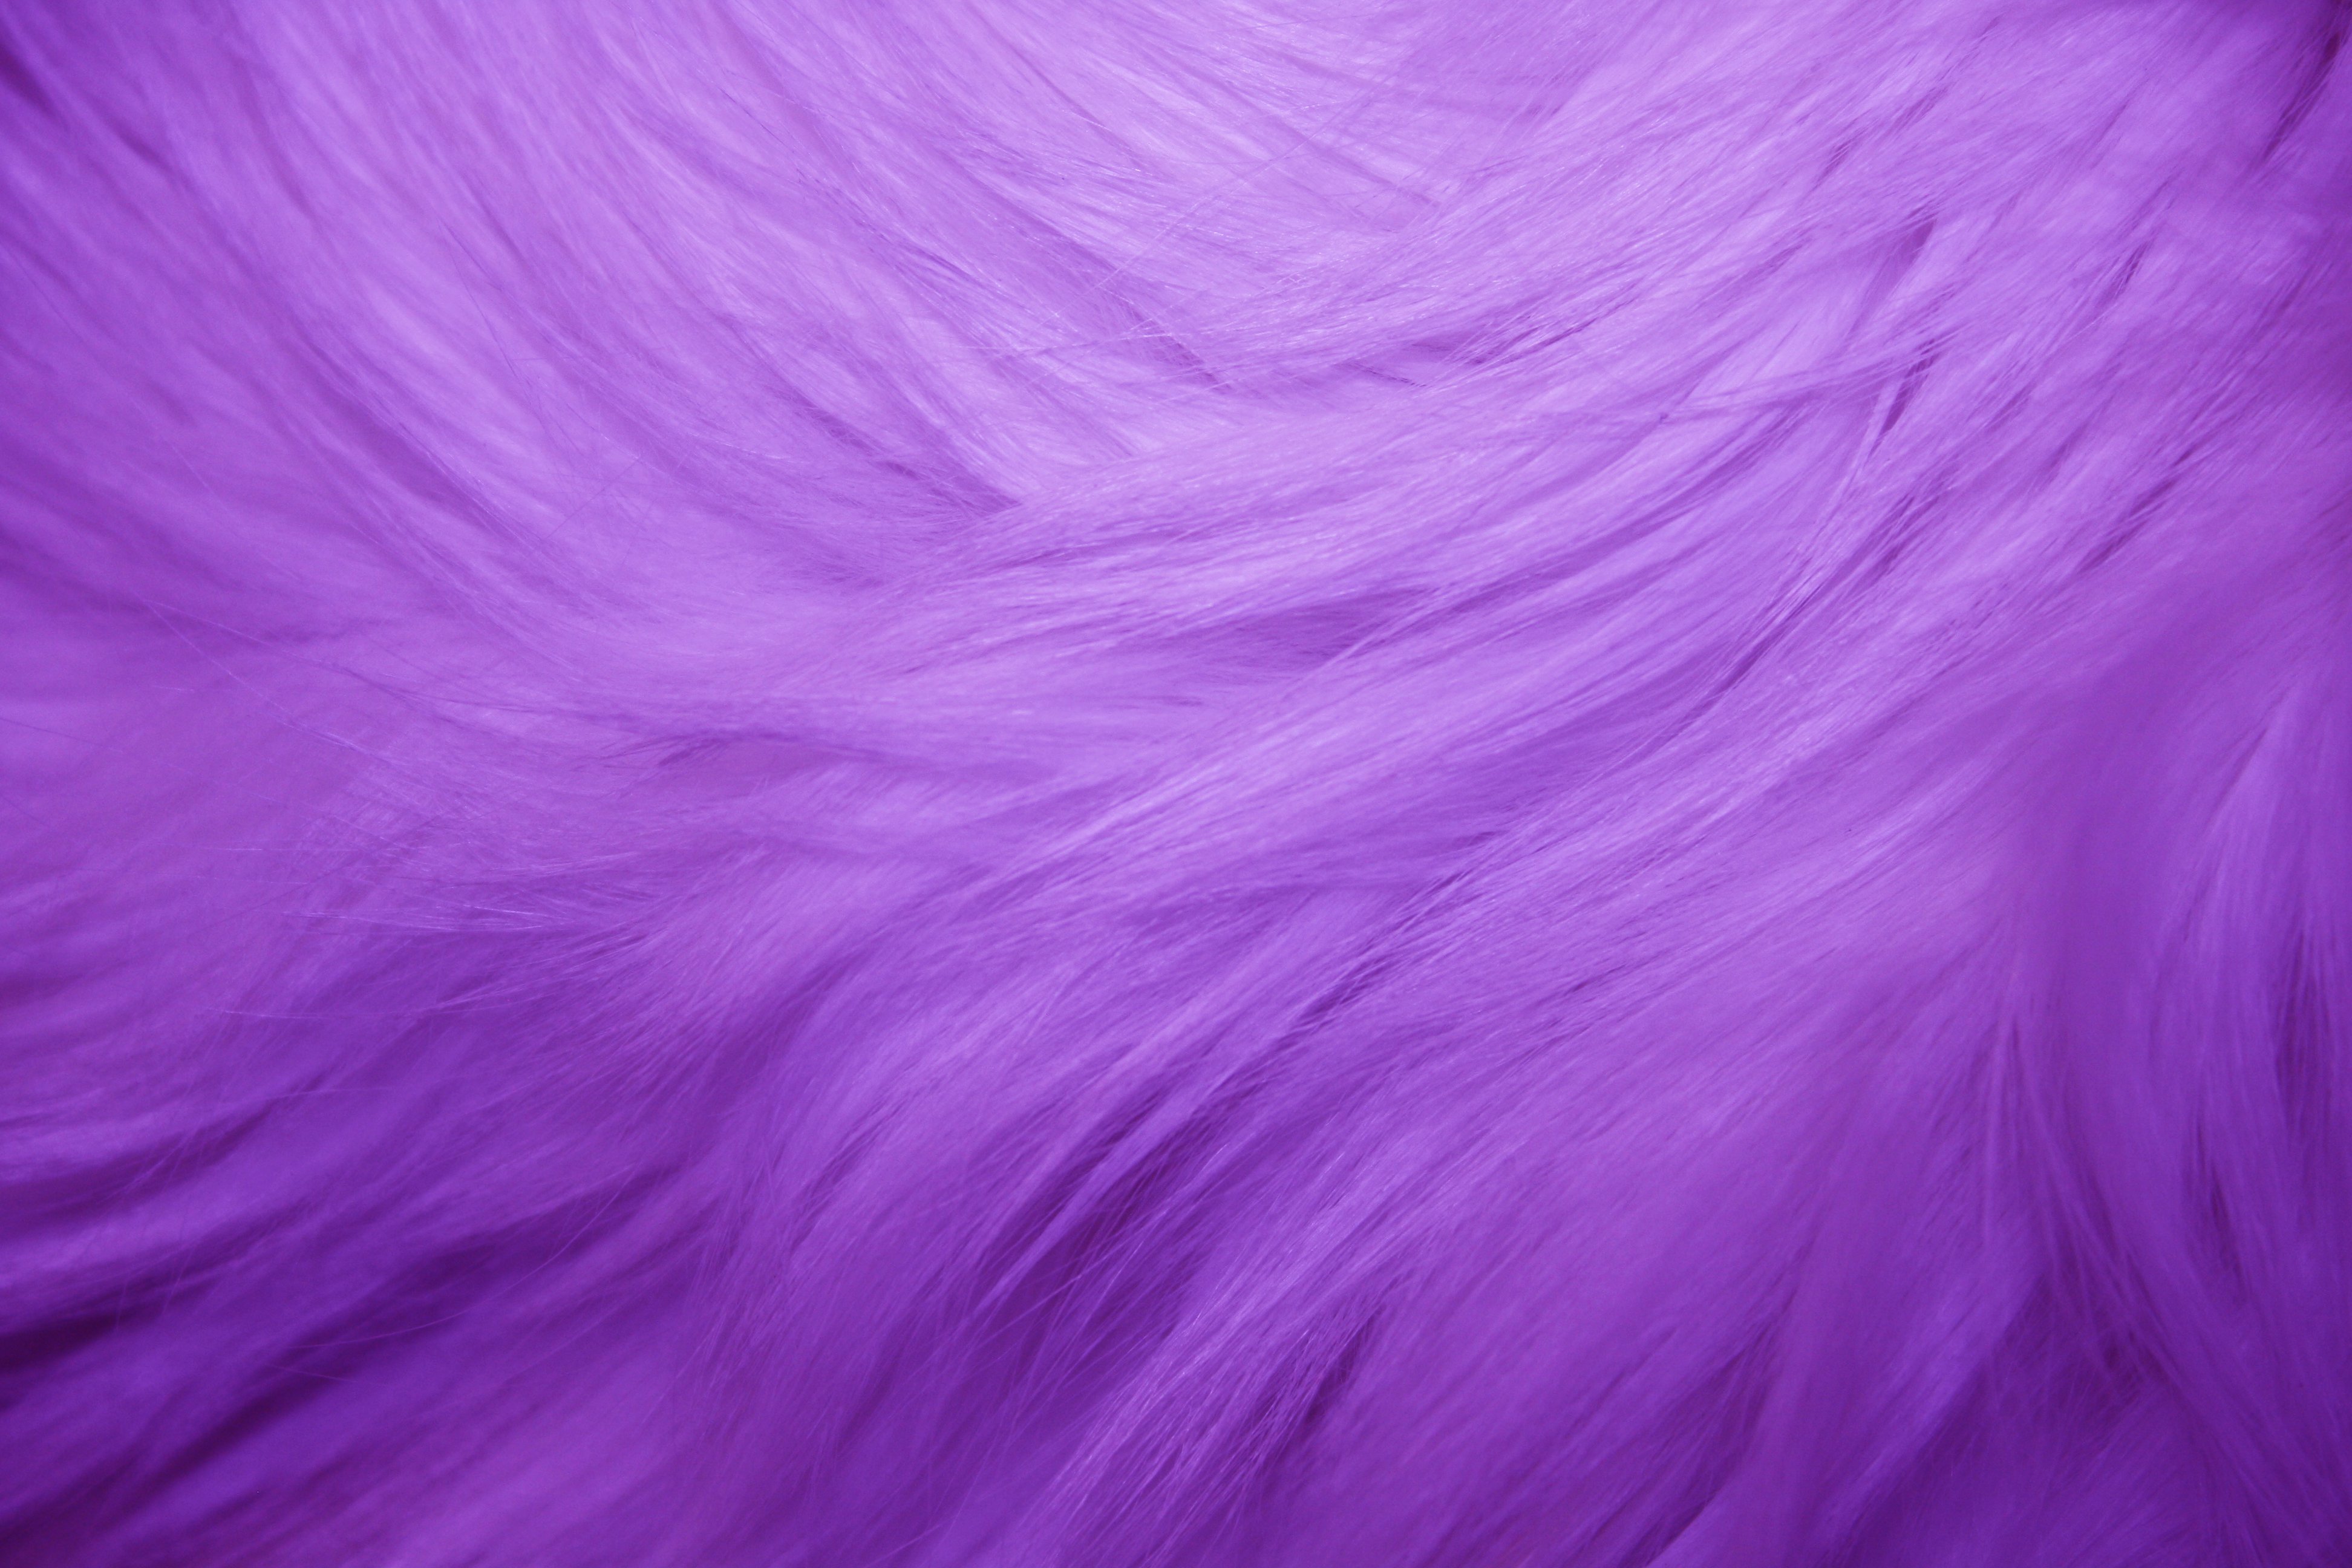 Purple Texture Background By Marina Shemesh Public Domain